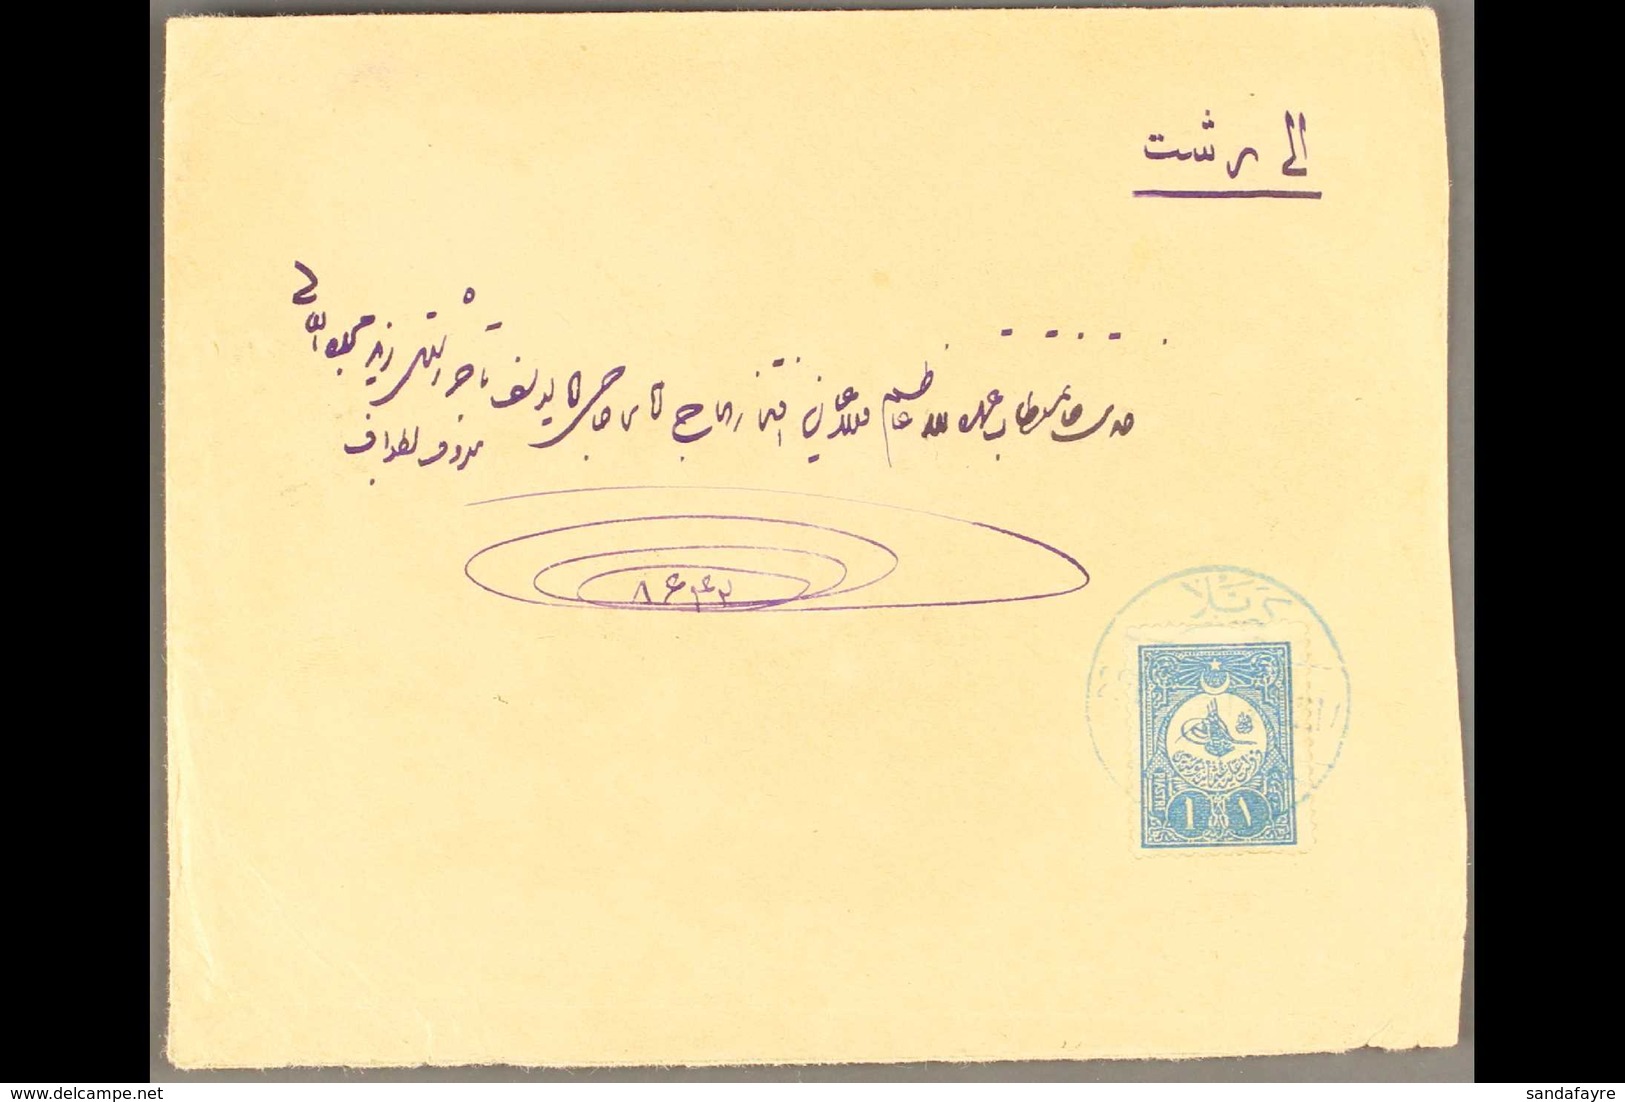 1908 TURKEY USED IN IRAQ. 1908 Env To Persia, Bearing Ottoman 1908 1pi Tied By Very Fine Bilingual "KERBELA" Cds In Brig - Iraq